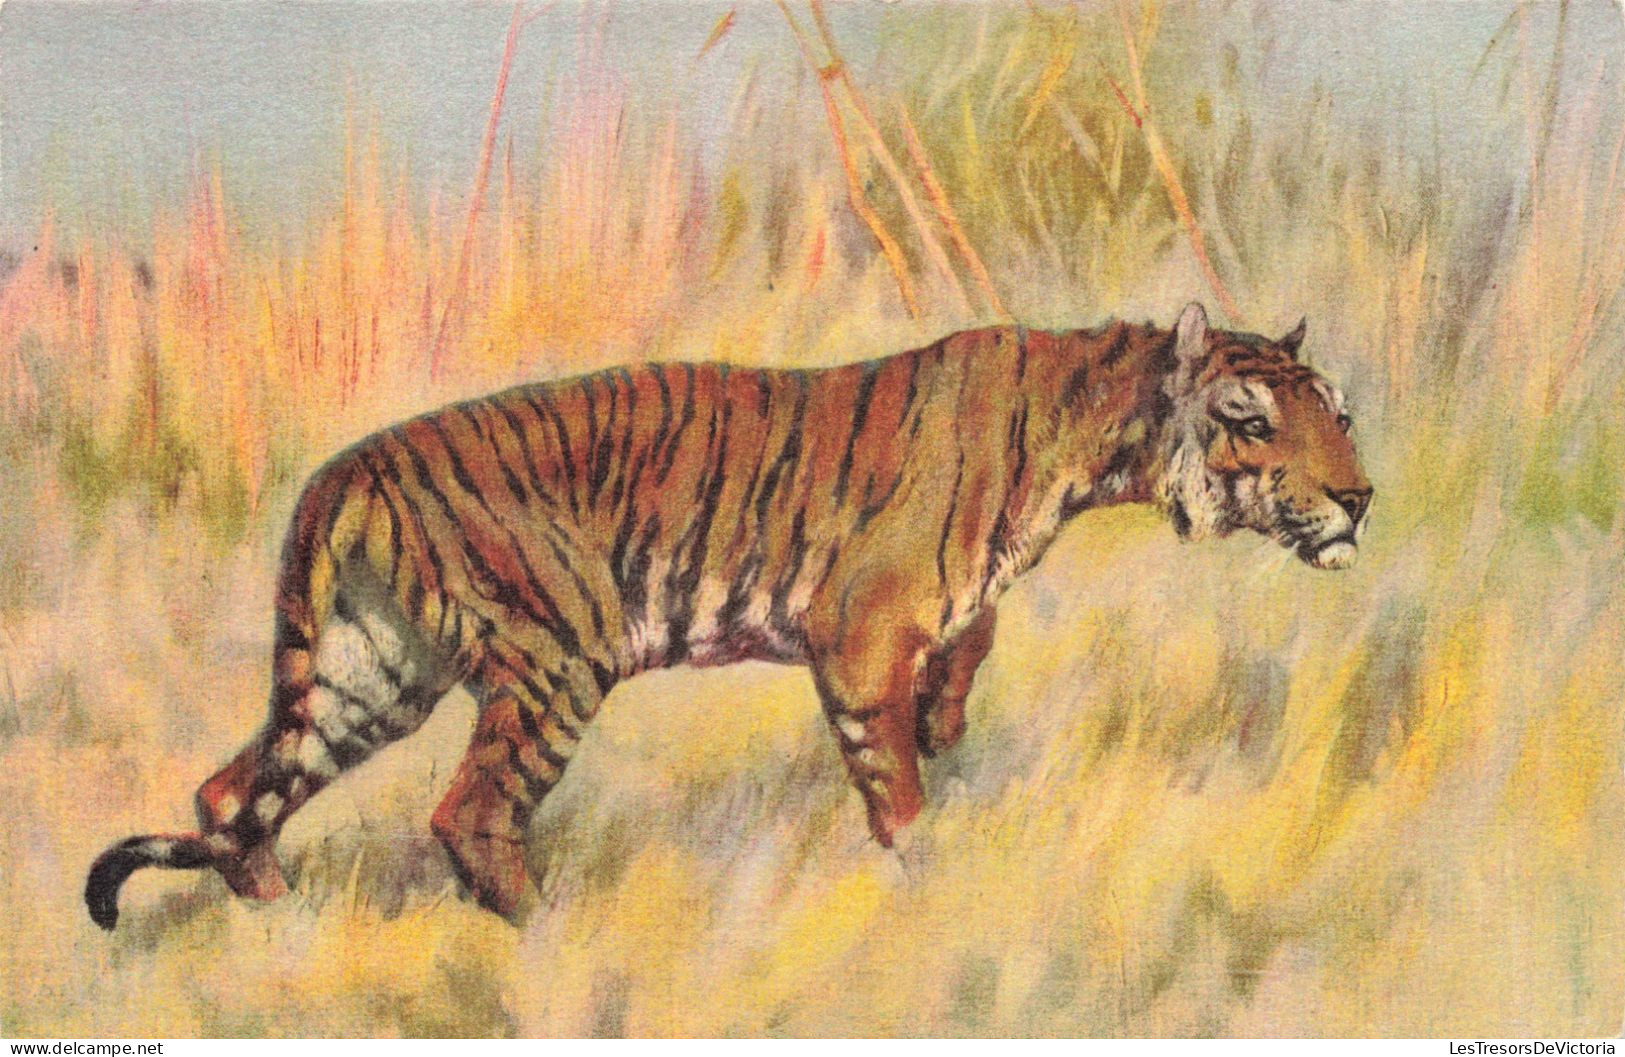 ANIMAUX & FAUNE - Tigre - Colorisé - Carte Postale Ancienne - Tiger